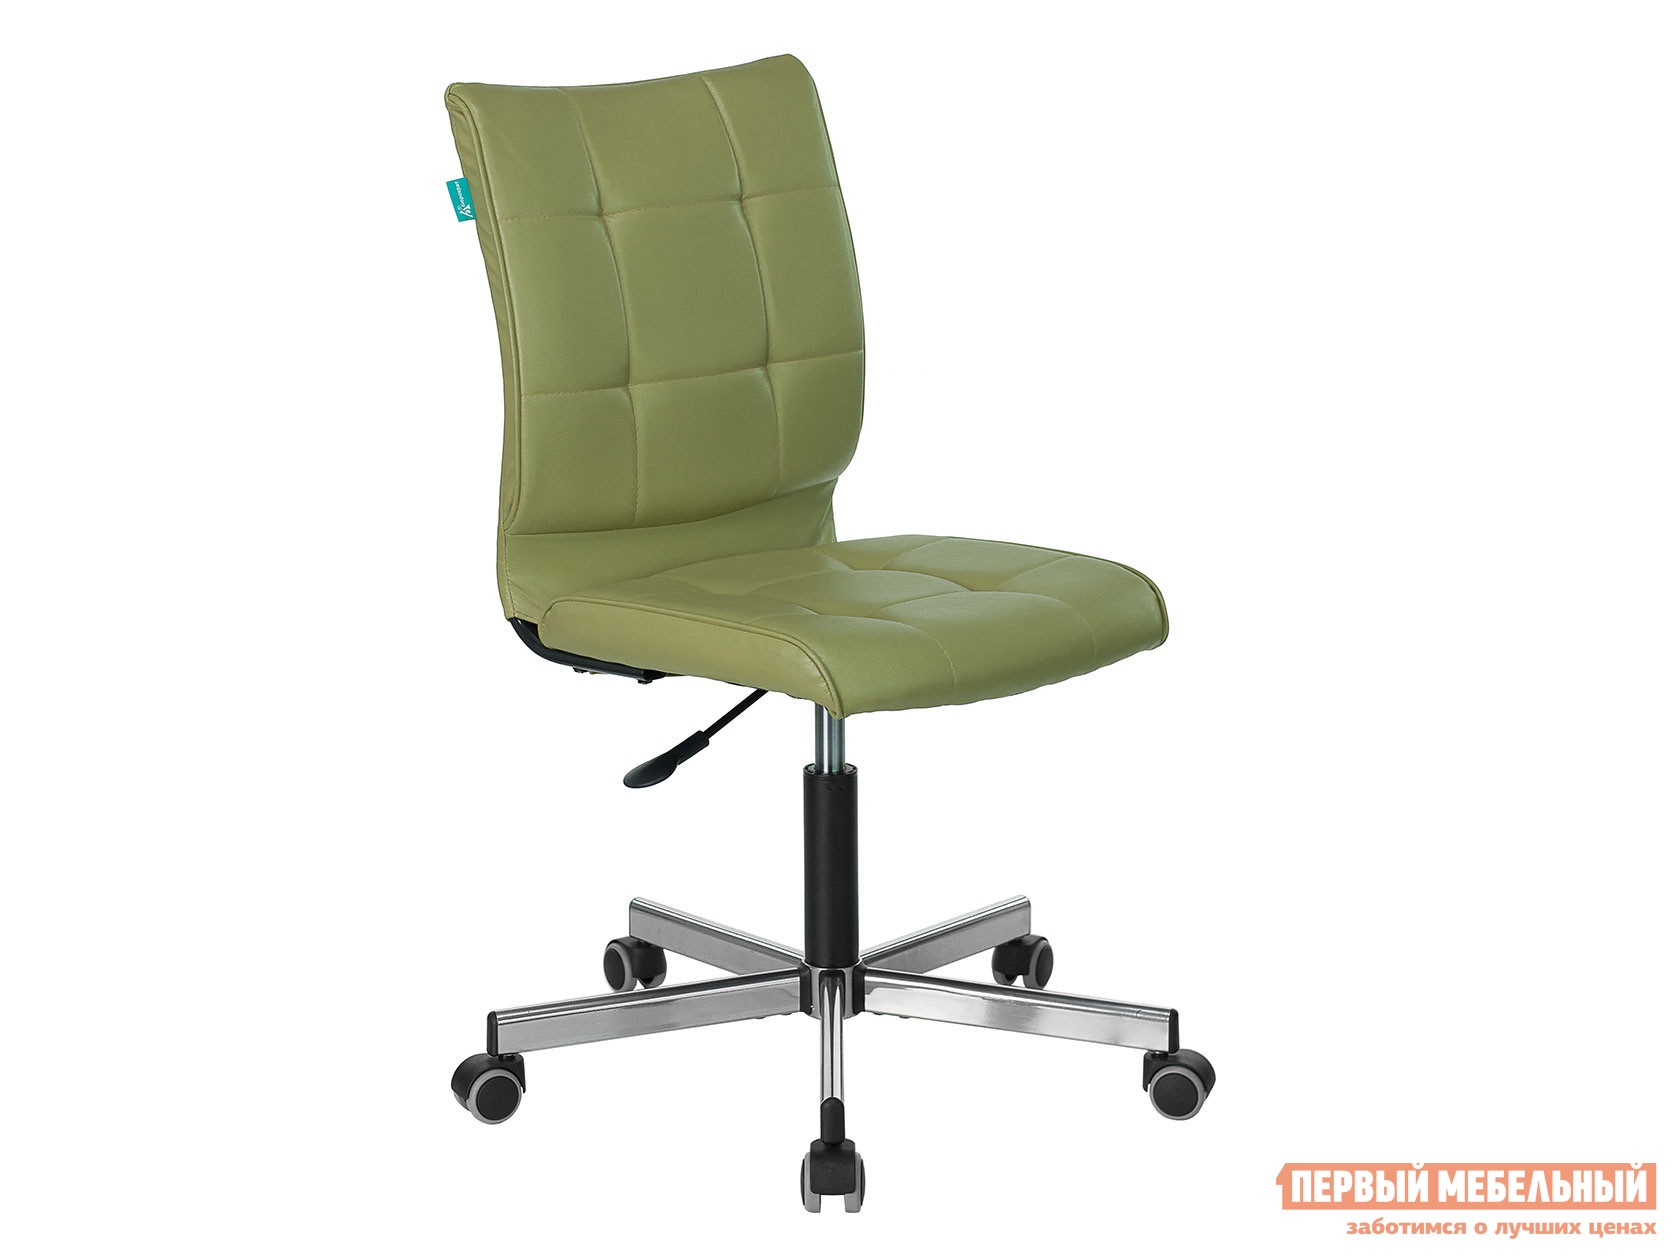 Офисное кресло ch-330m green, иск. кожа preview 1